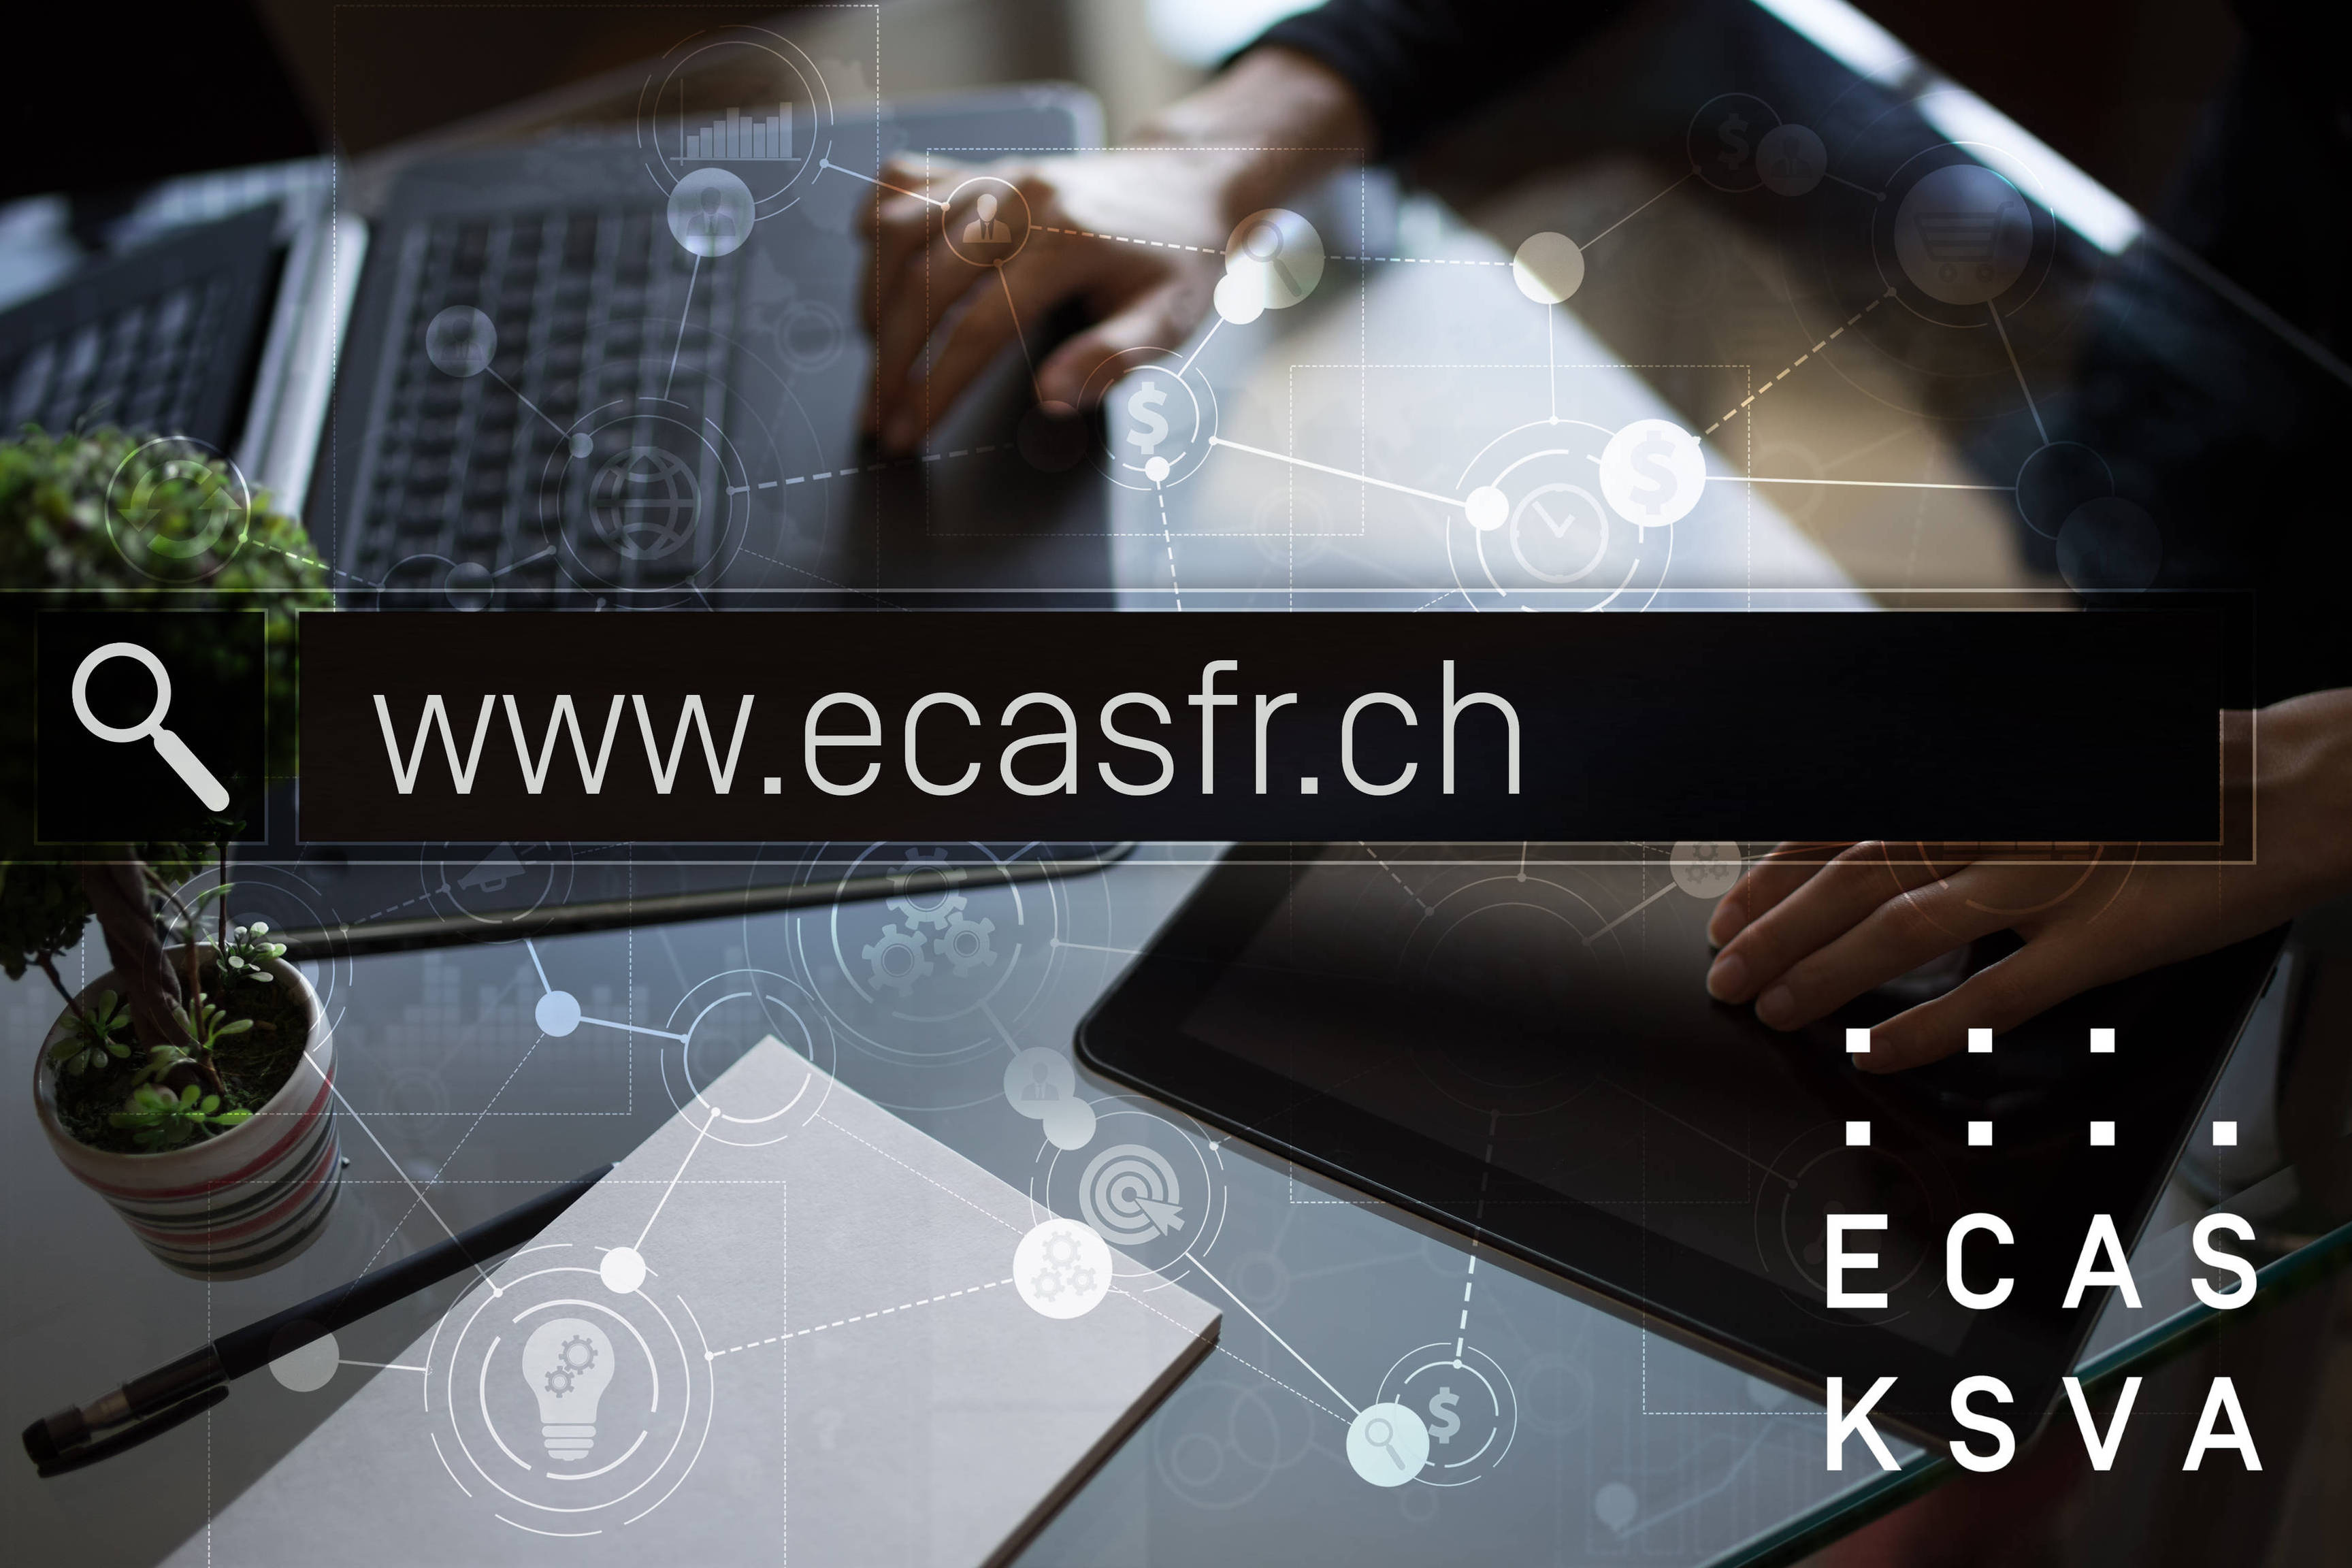 Nouvelle adresse www.ecasfr.ch